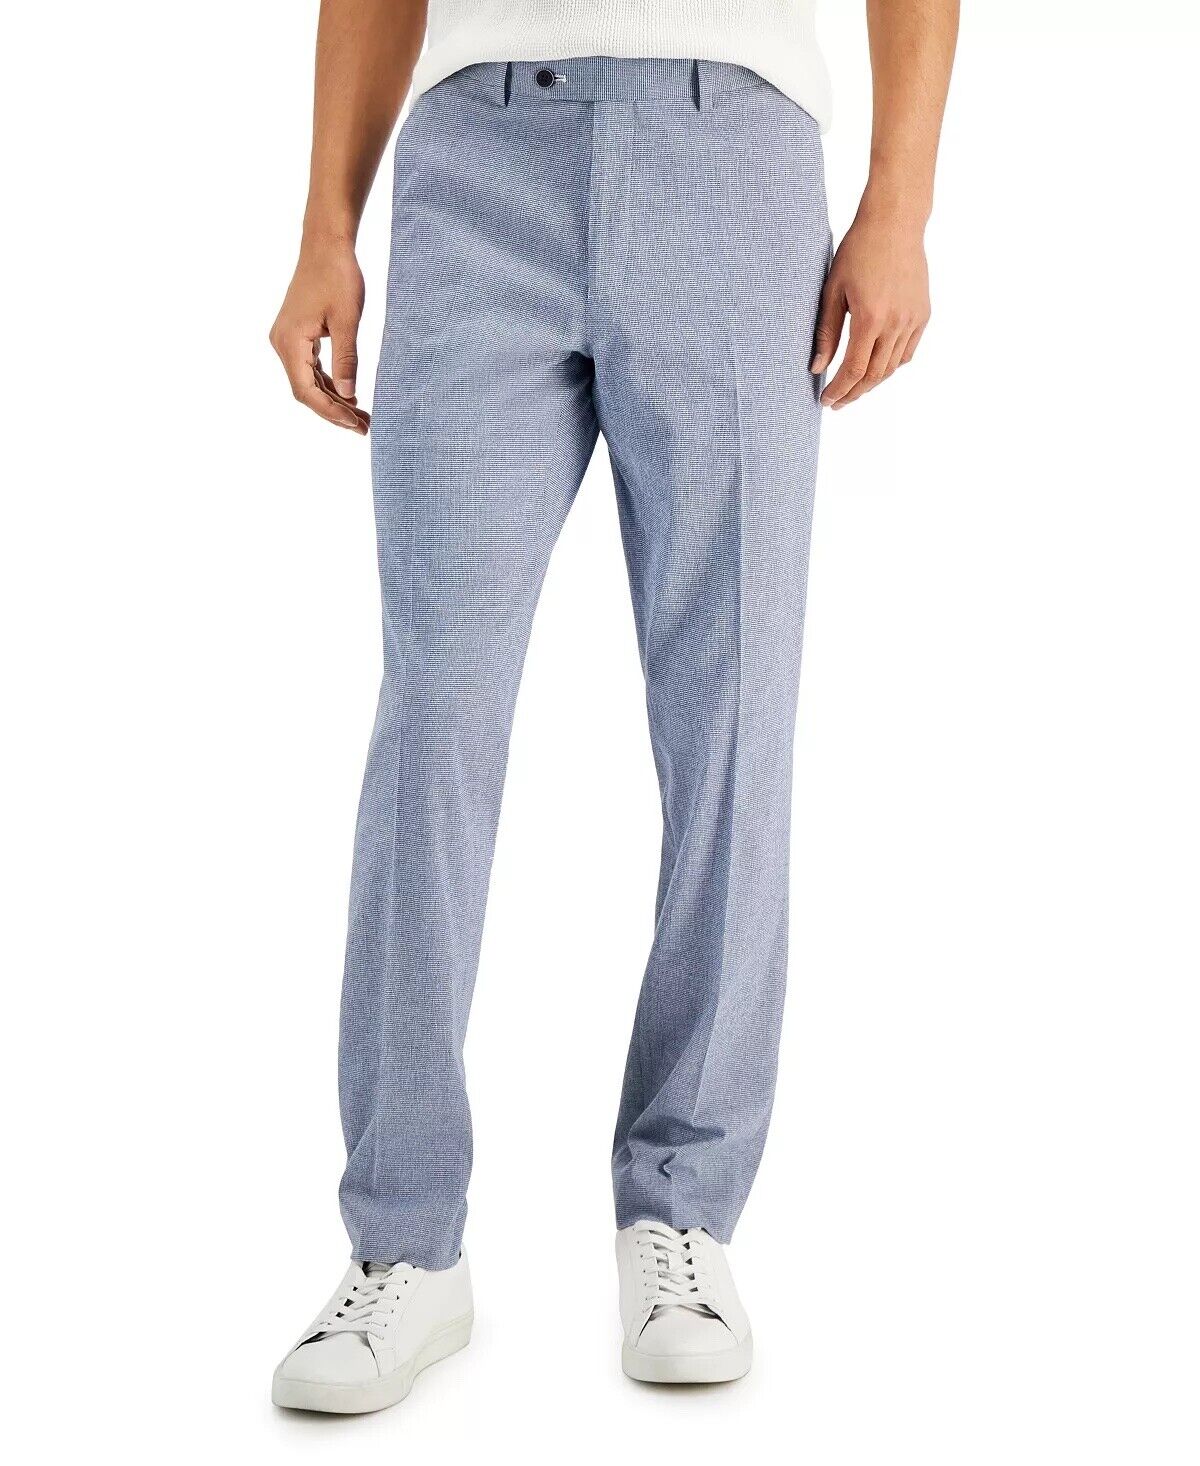 ALFANI Men's Slim-Fit Seersucker Check Dress Pants Blue White 34 x 32